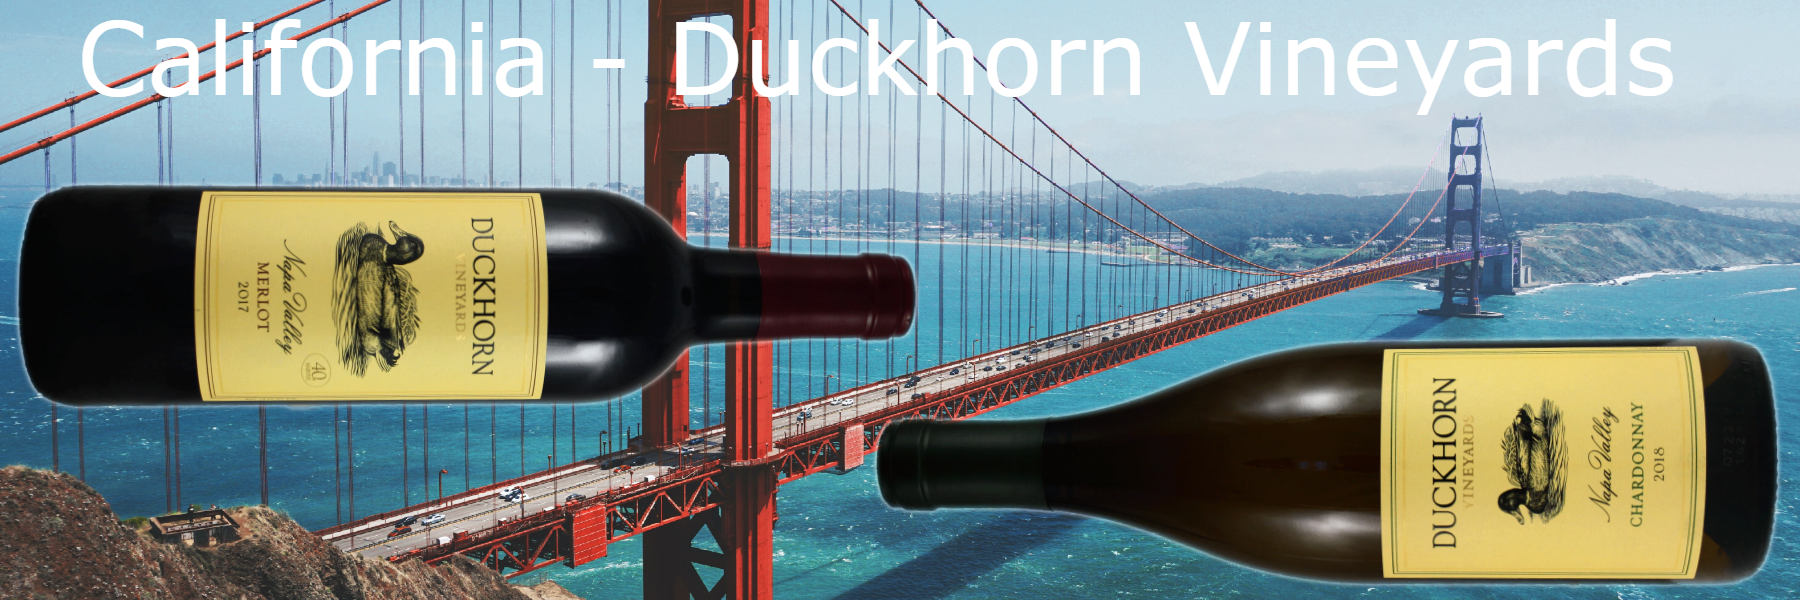 Duckhorn Vineyards, California, USA